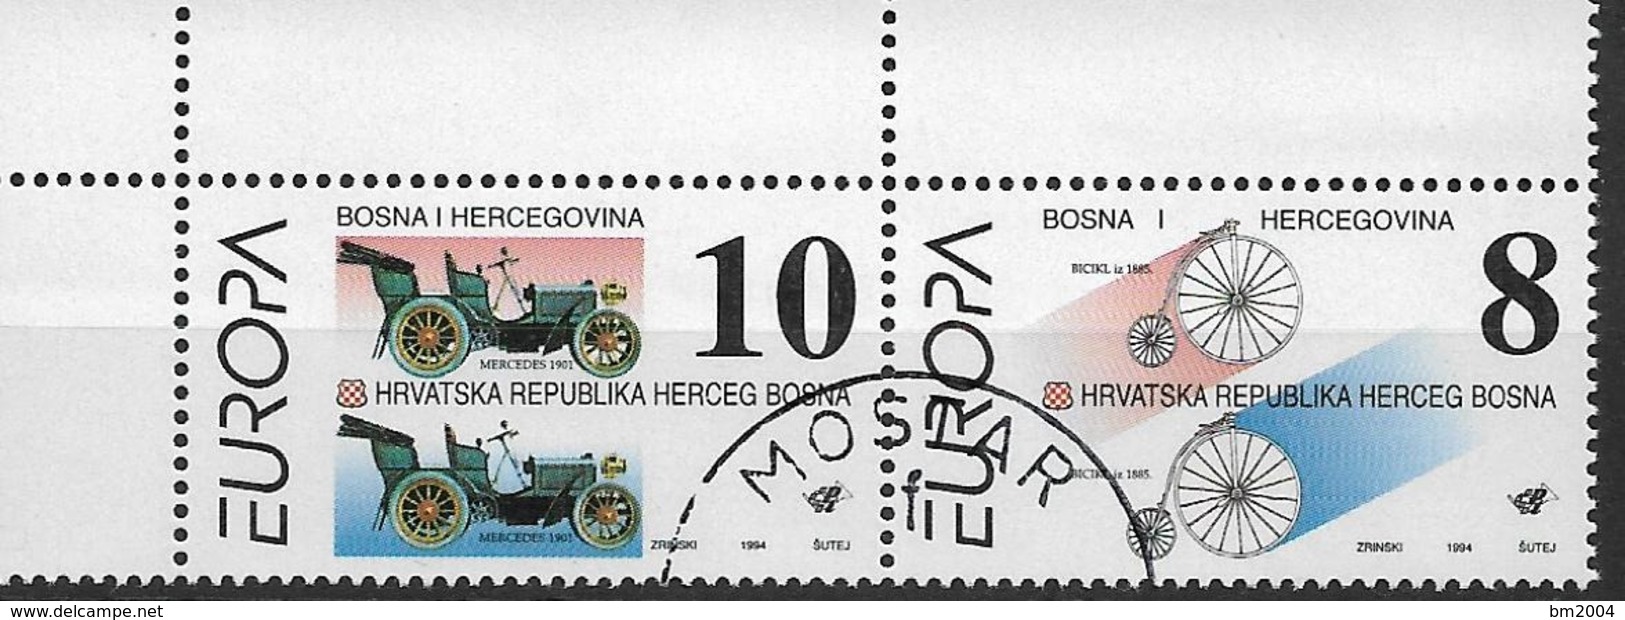 1994 Bosnia - Herzegovina, Bosnien-Herzegowina Croat.  Mostar Mi. 17-18 Used   Europa: Entdeckungen Und Erfindungen - 1994